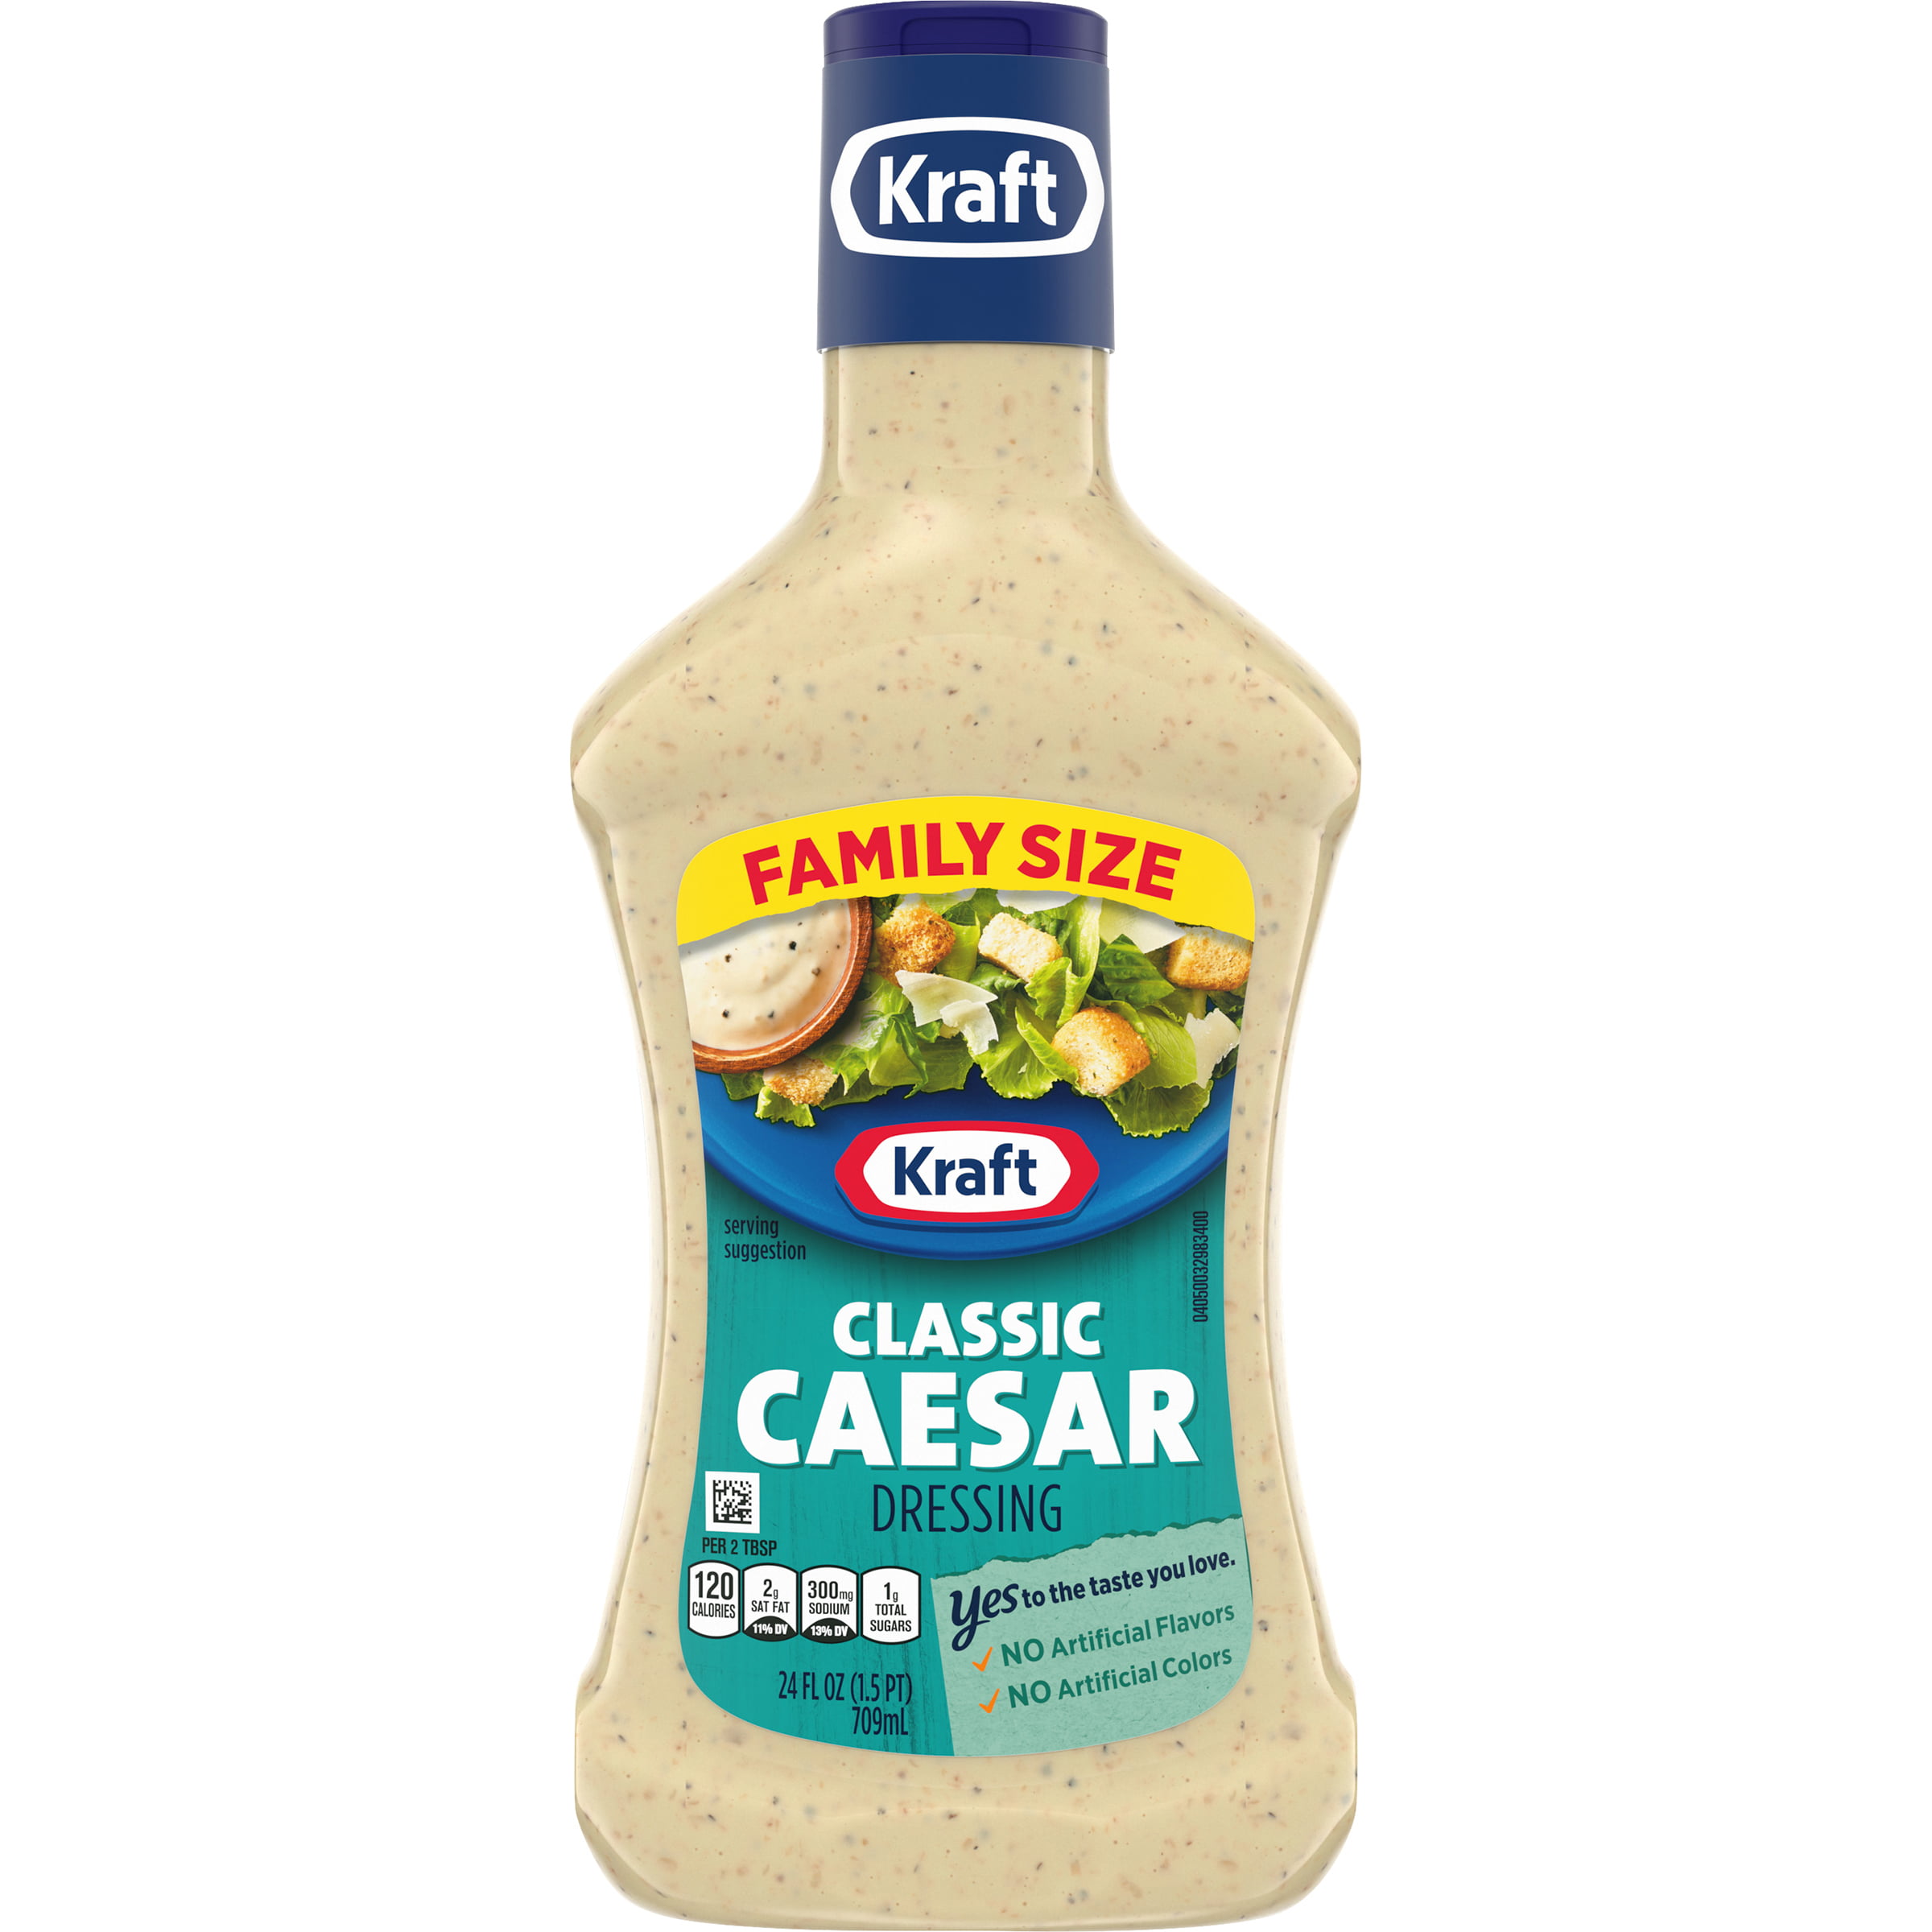 Kraft Classic Caesar Dressing, 24 fl oz Bottle - Walmart.com - Walmart.com